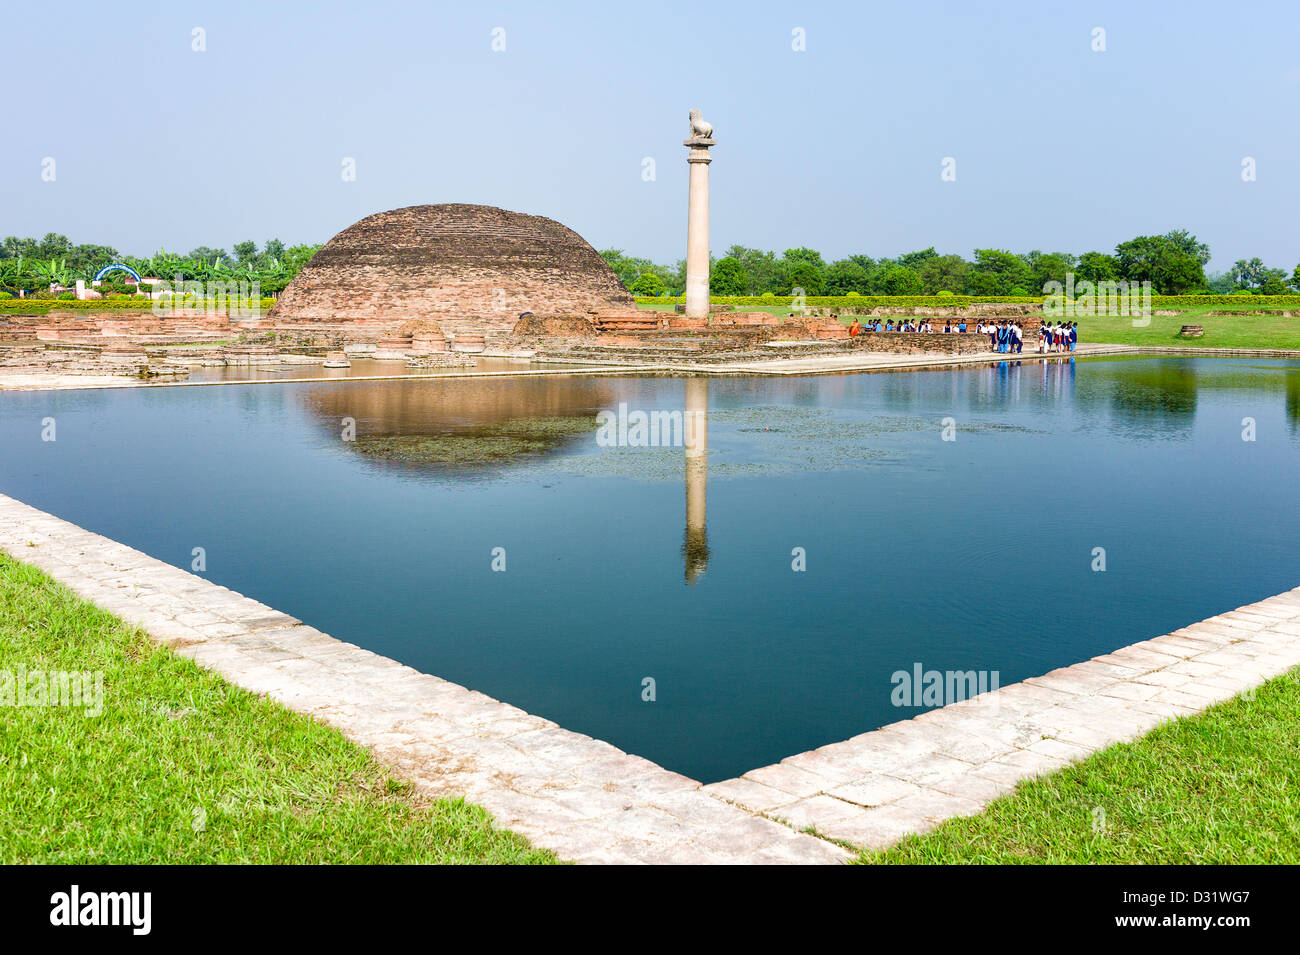 Buddhist stupa and pillar of Ashoka at the ancient ruins of the city of Vaishali near Patna, Bihar, Uttar Pradesh, north India. Stock Photo